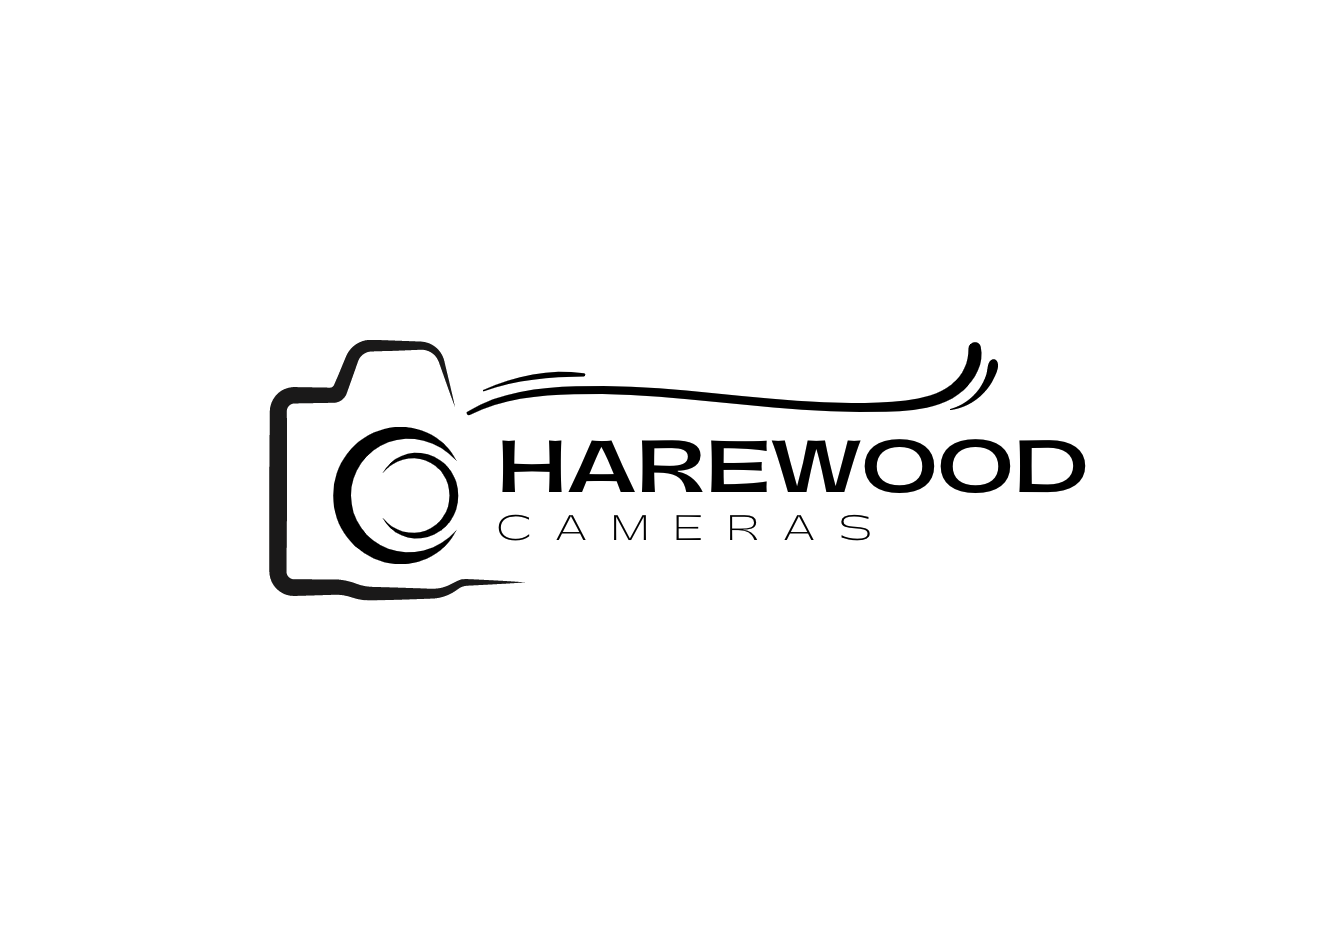 Harewood Cameras